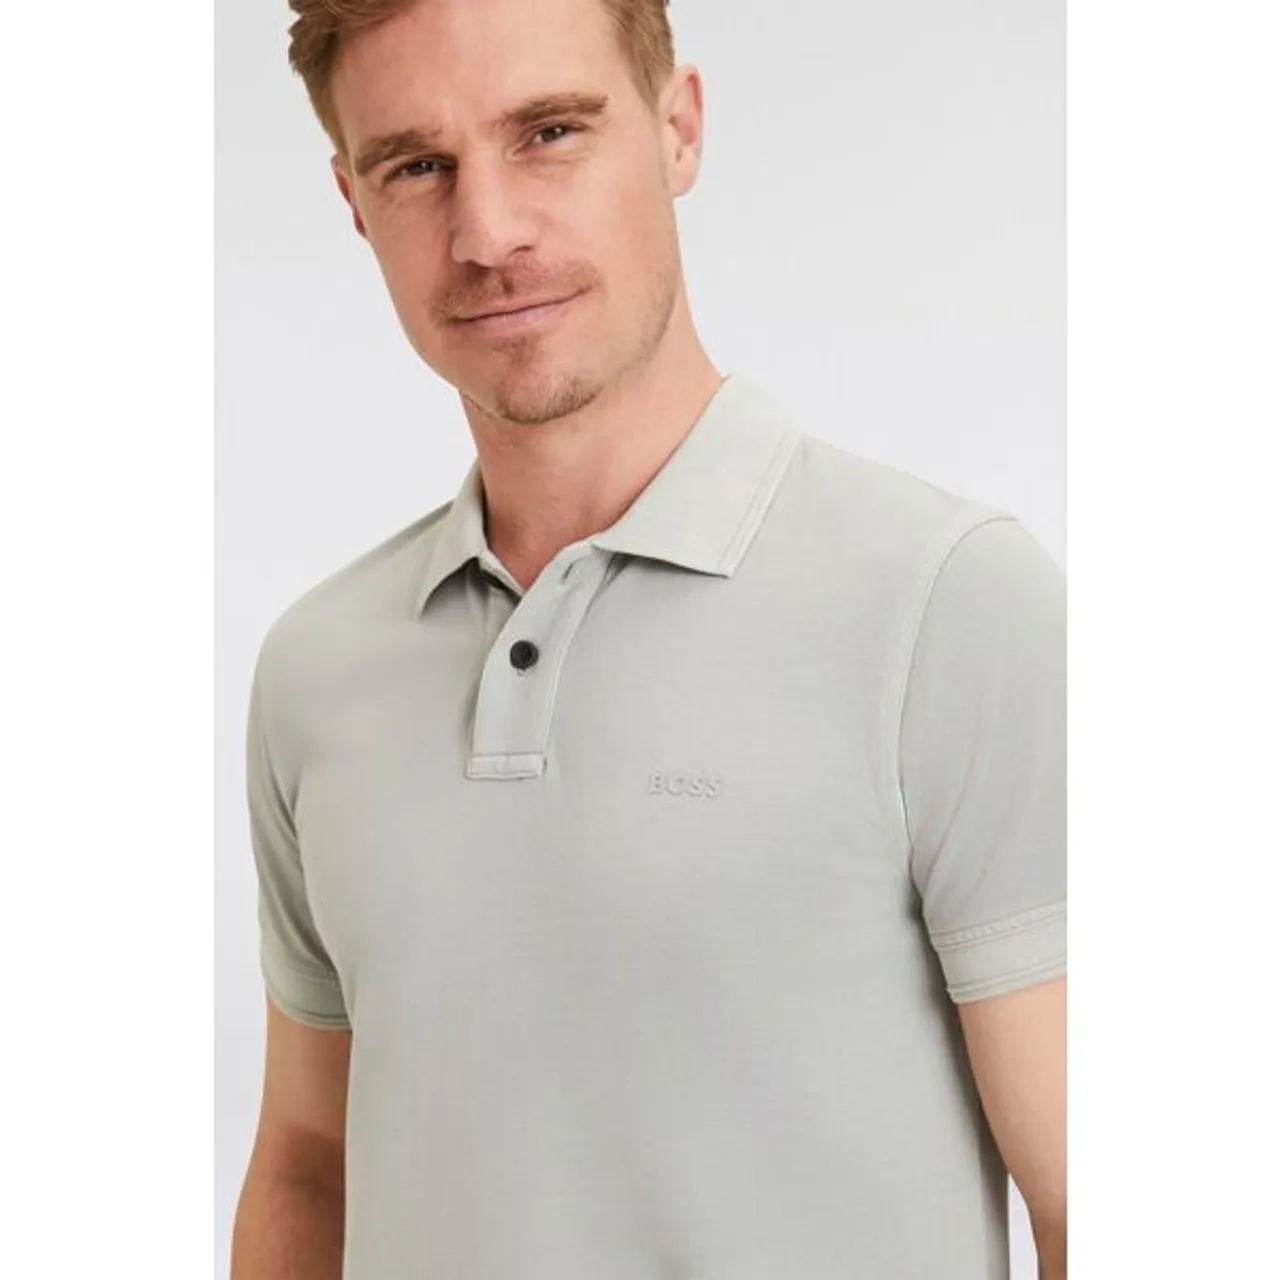 Poloshirt BOSS ORANGE "Prime" Gr. S, grau (051_light, pastel_grey) Herren Shirts Kurzarm